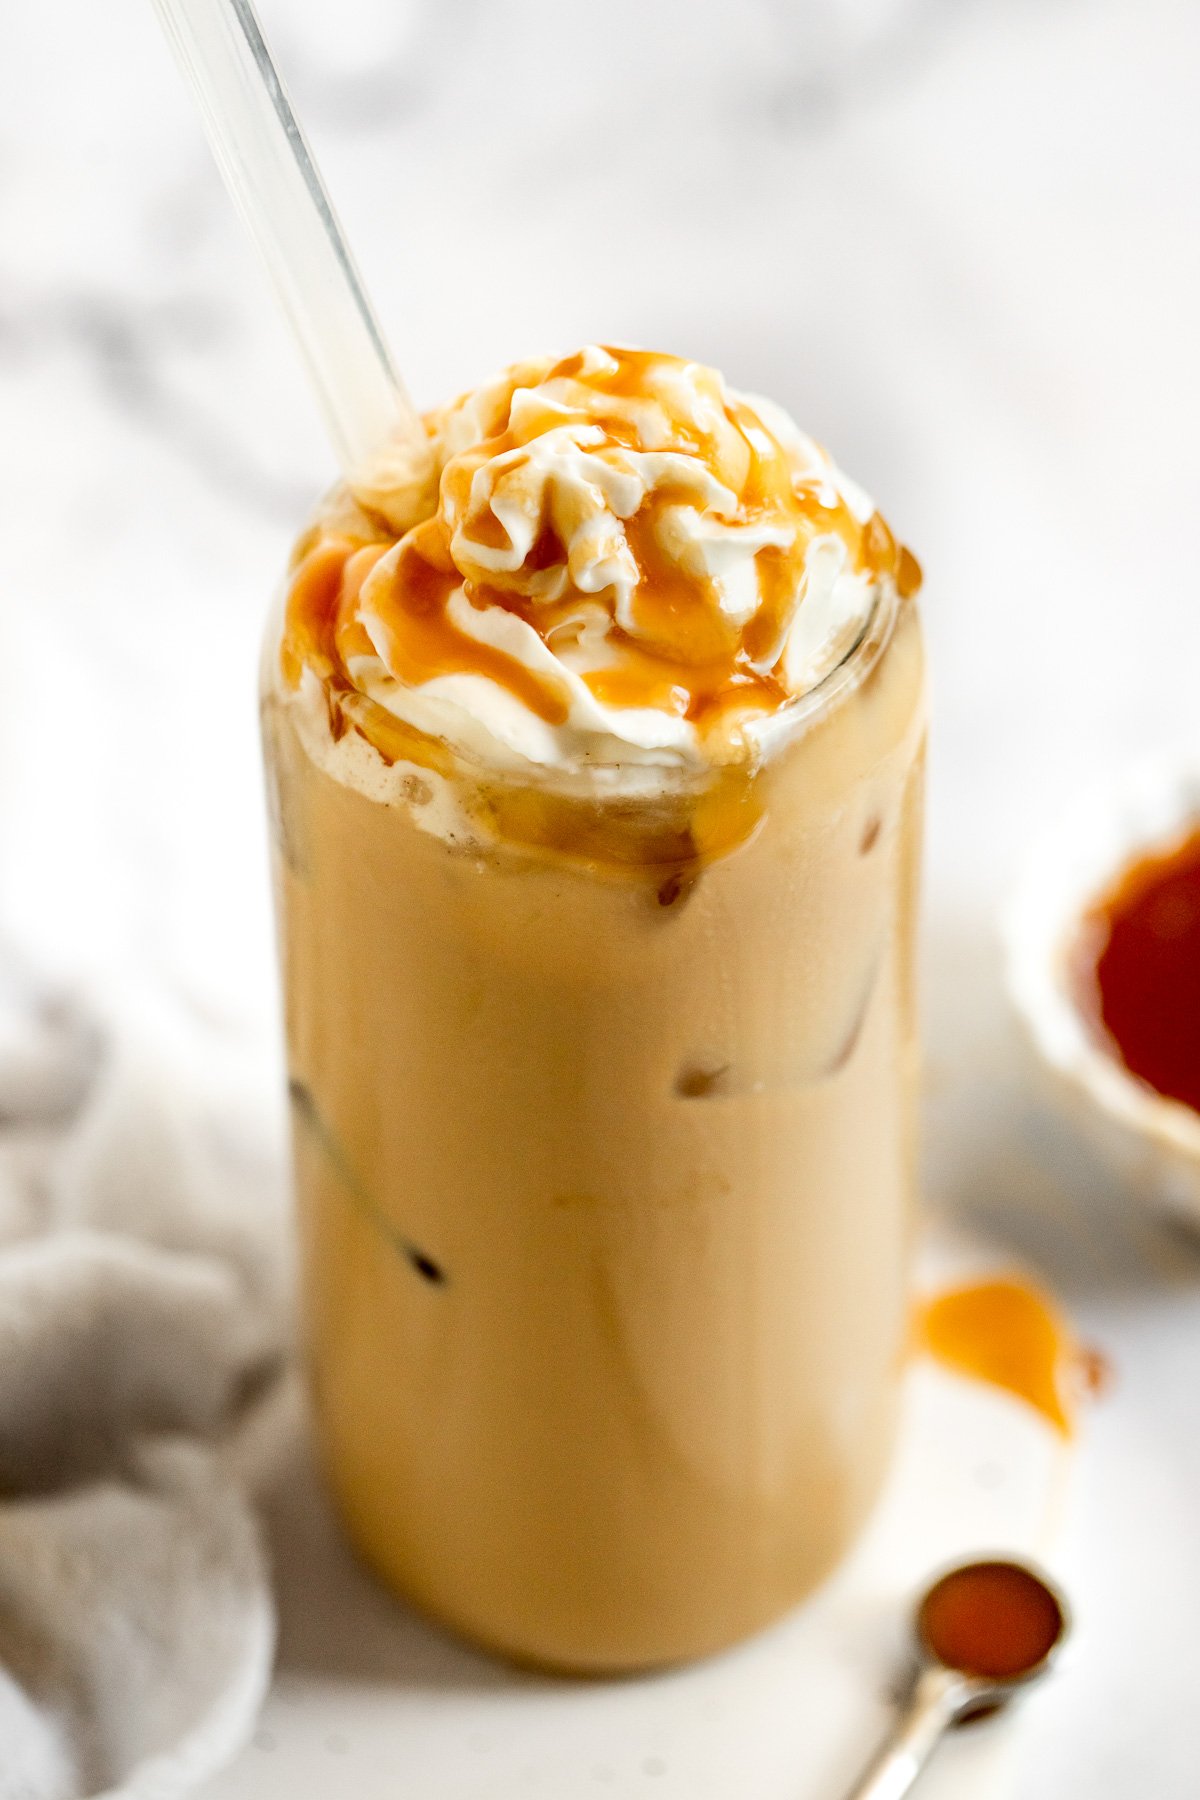 Starbucks Copycat Iced Caramel Macchiato – Citrus & Delicious